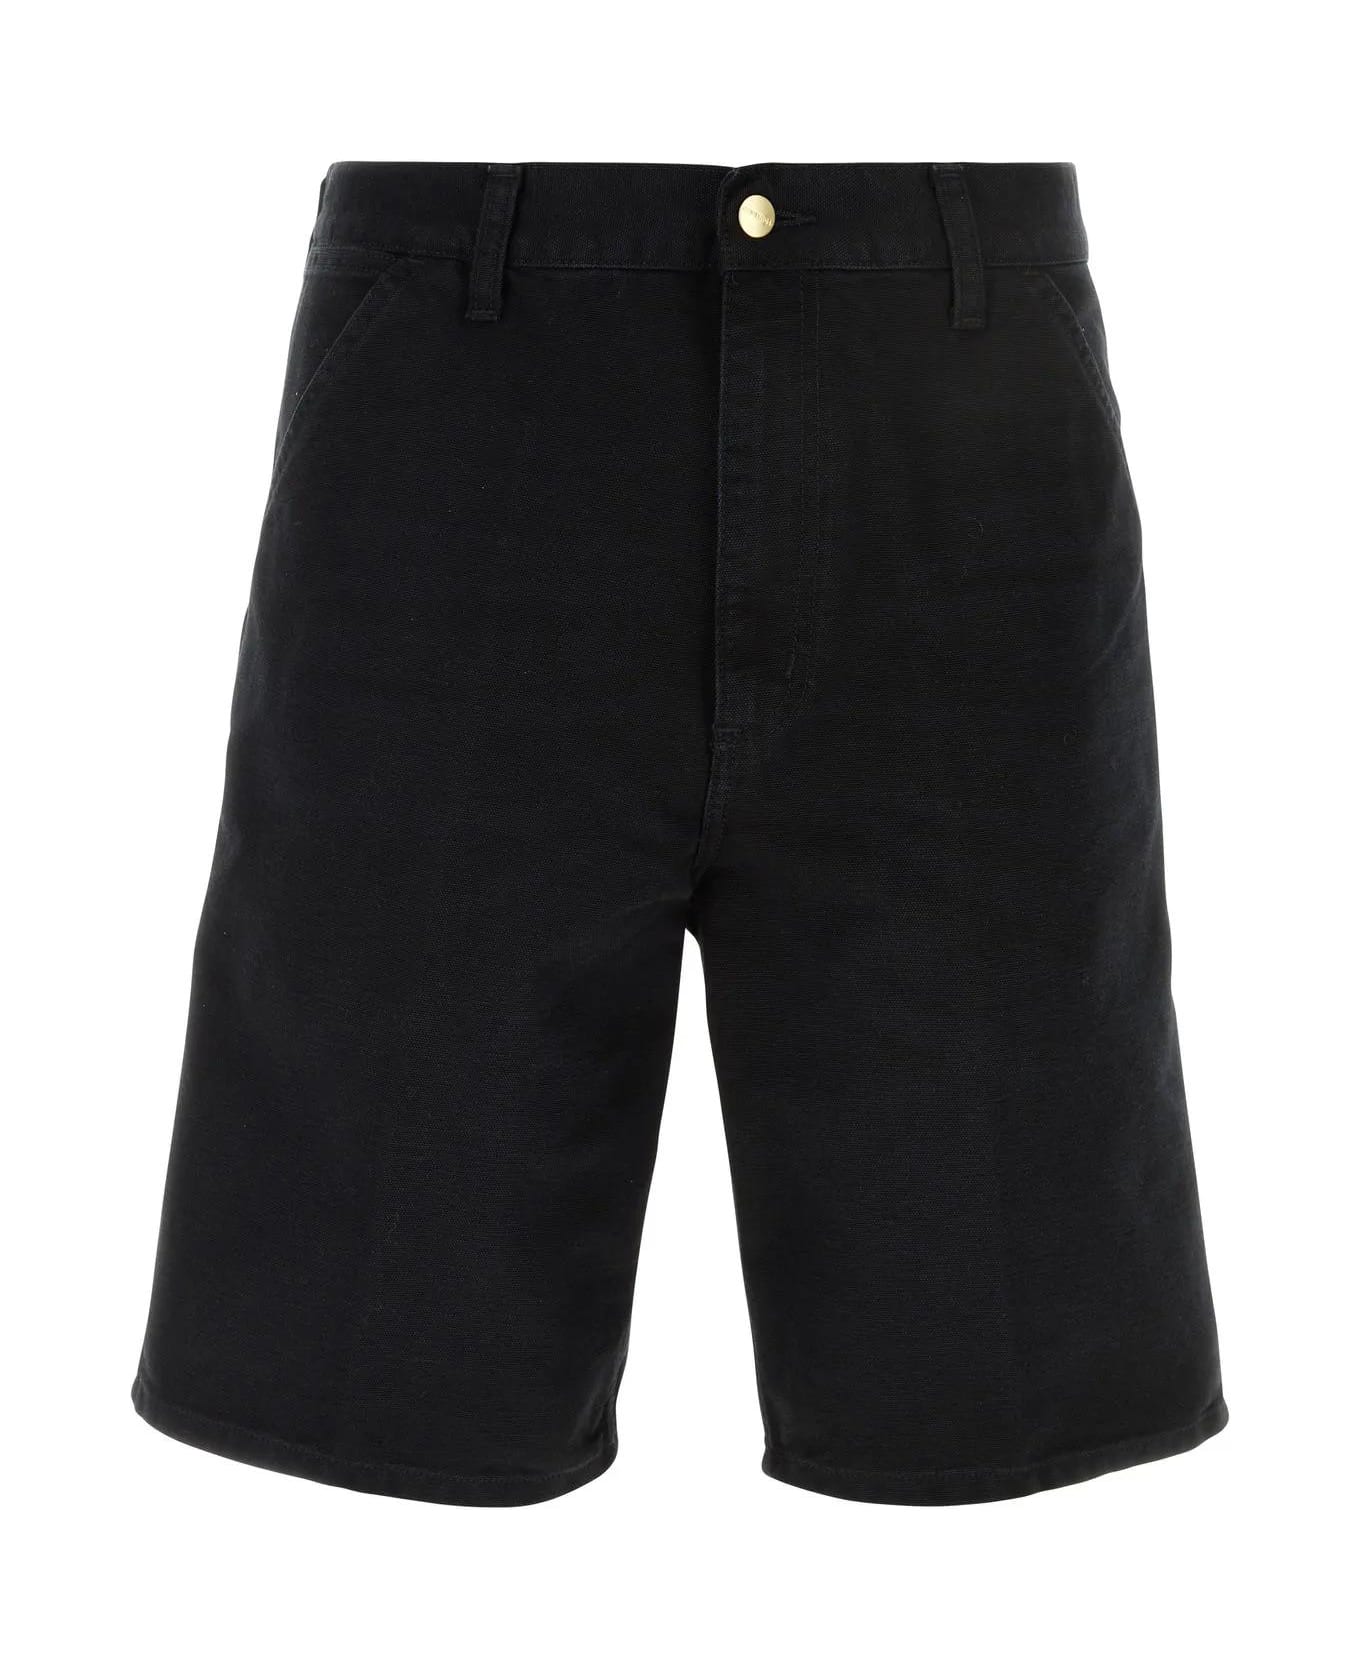 Carhartt WIP Black Cotton Single Knee Short - Grey